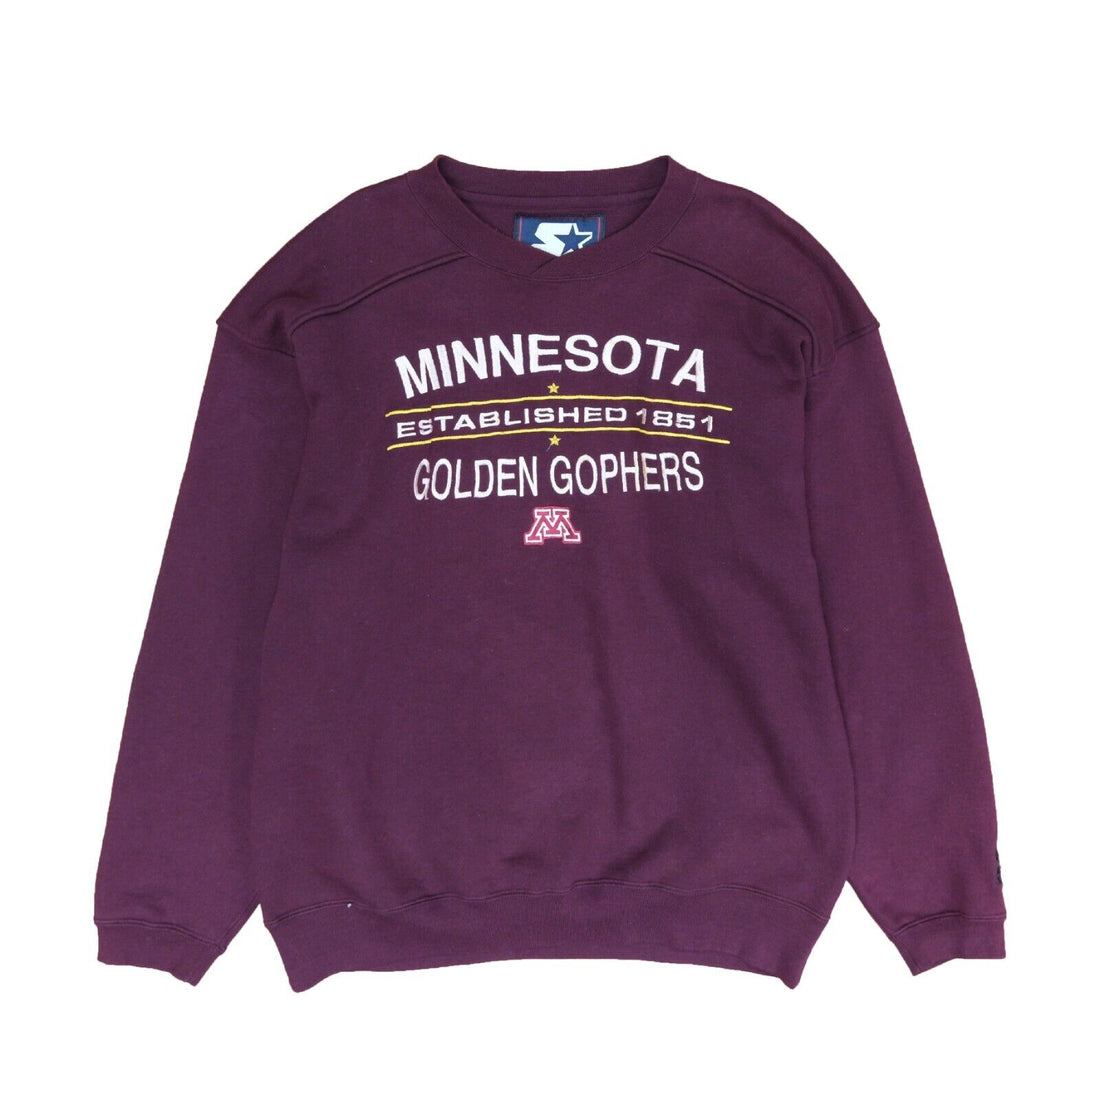 Vintage Minnesota Golden Gophers Starter Sweatshirt Size Large Maroon 90s NCAA